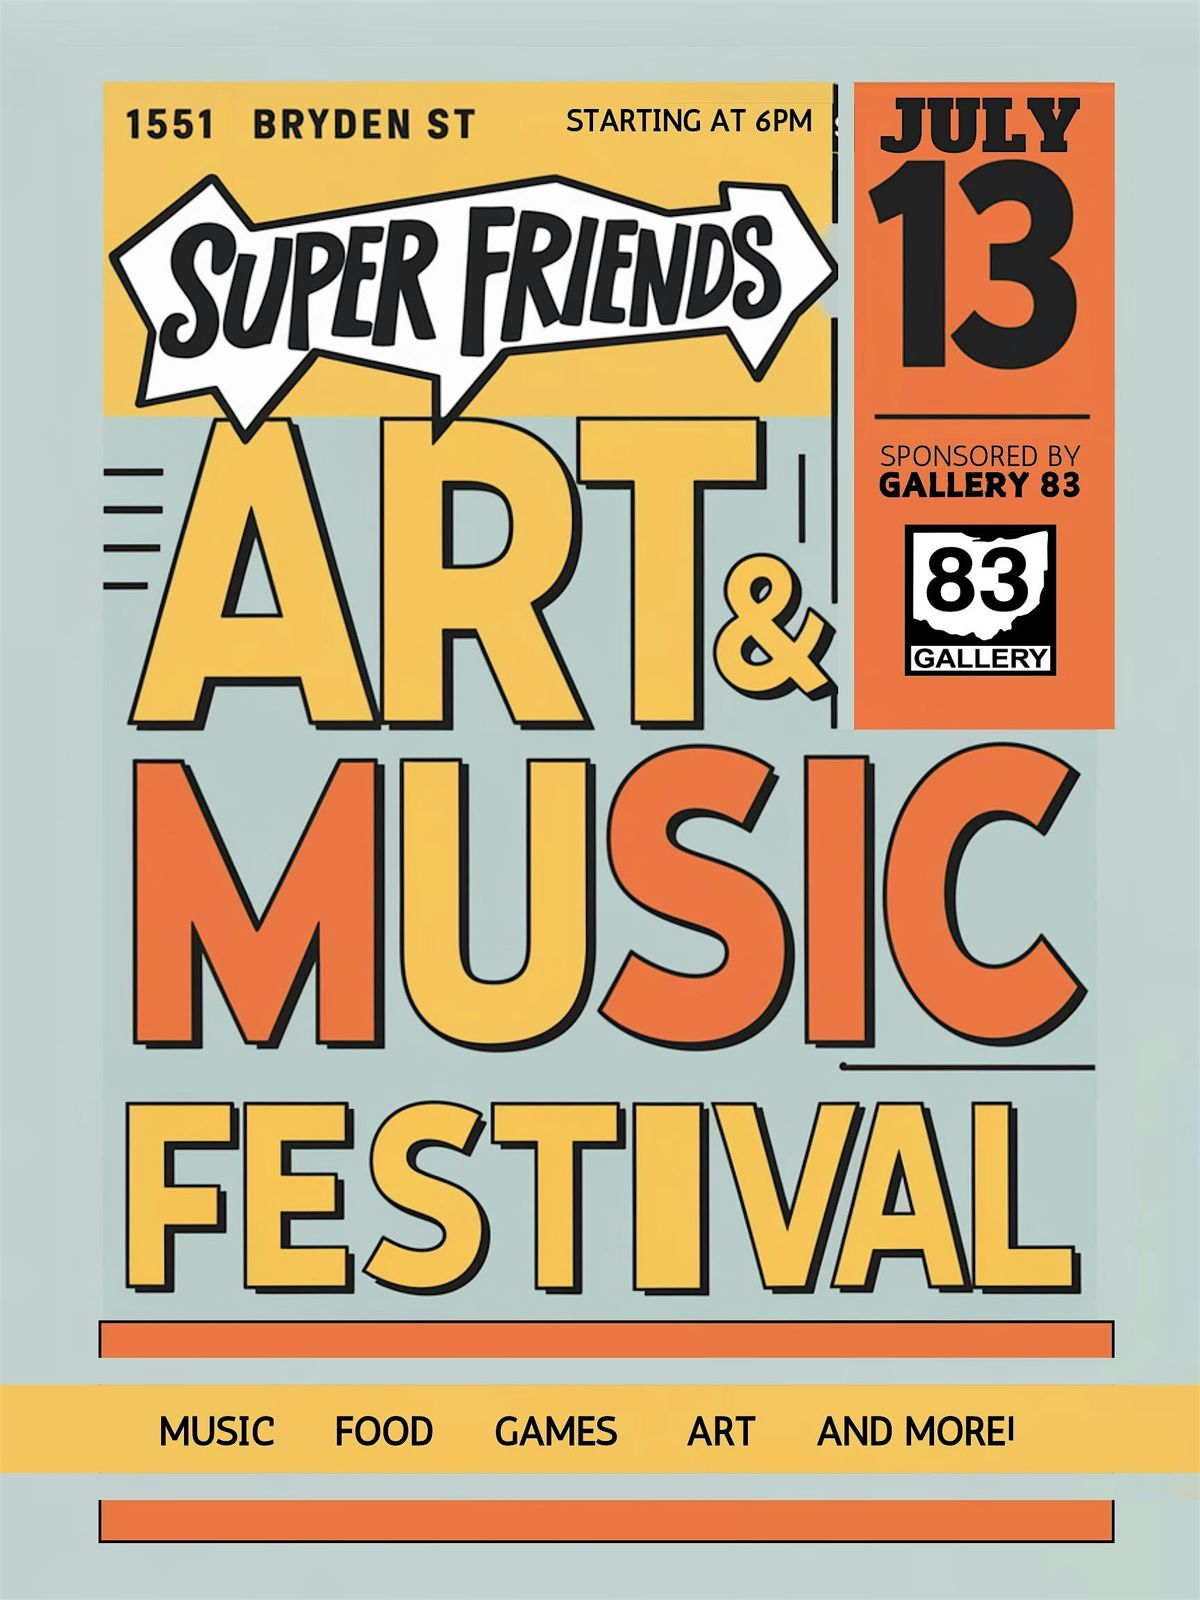 Super Friends ArtMarket Sponsored By 83 Gallery **FREE EVENT**